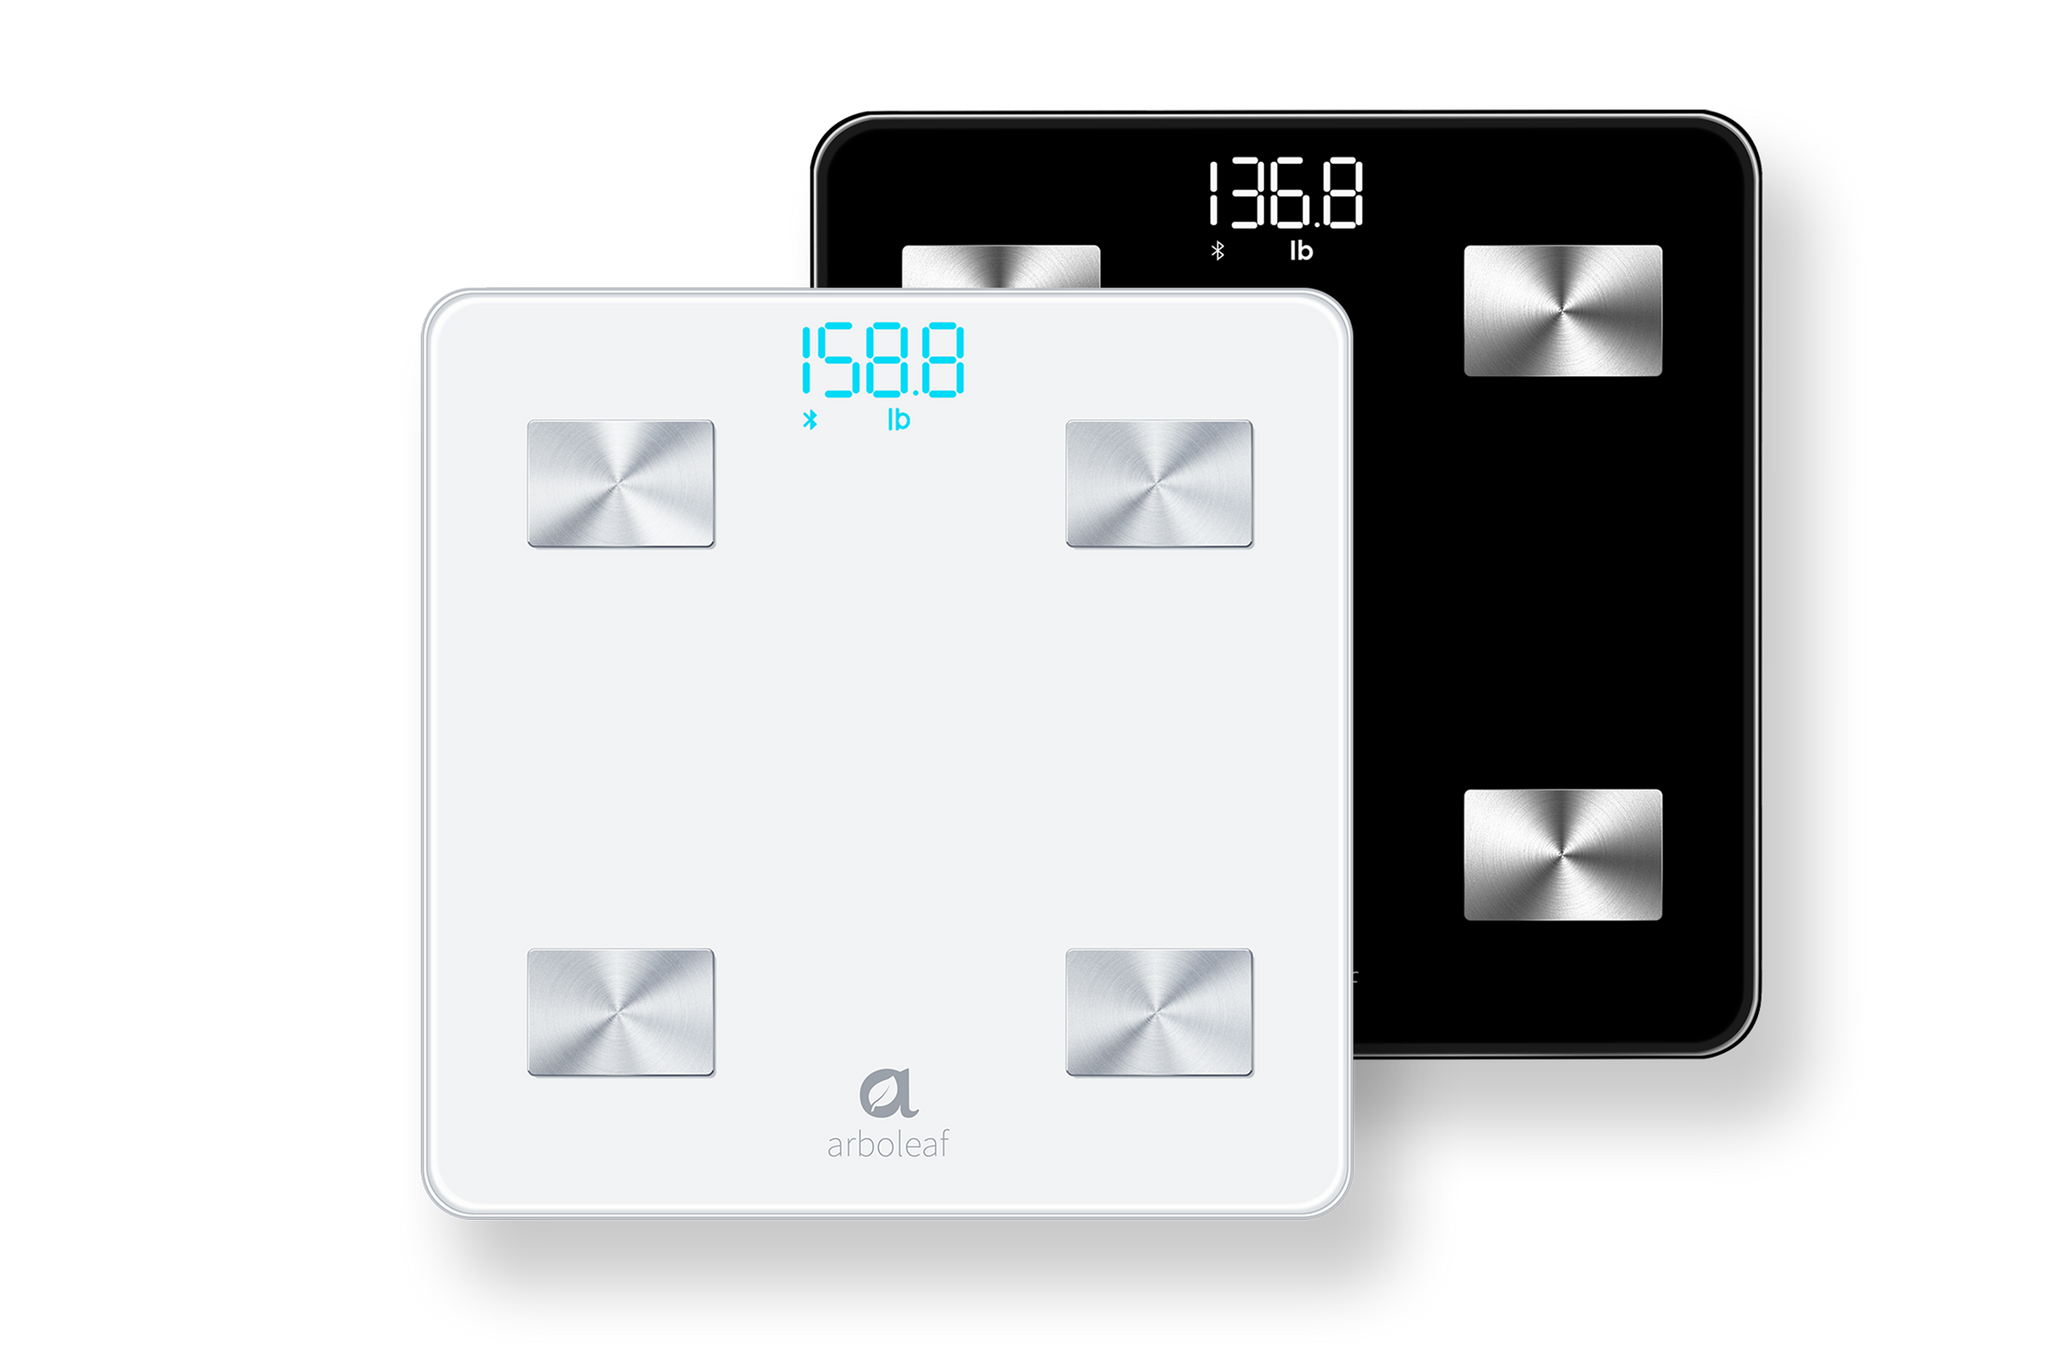 Abyon CS20N Gray Black Wireless Bluetooth Smart Digital Body Fat Scale